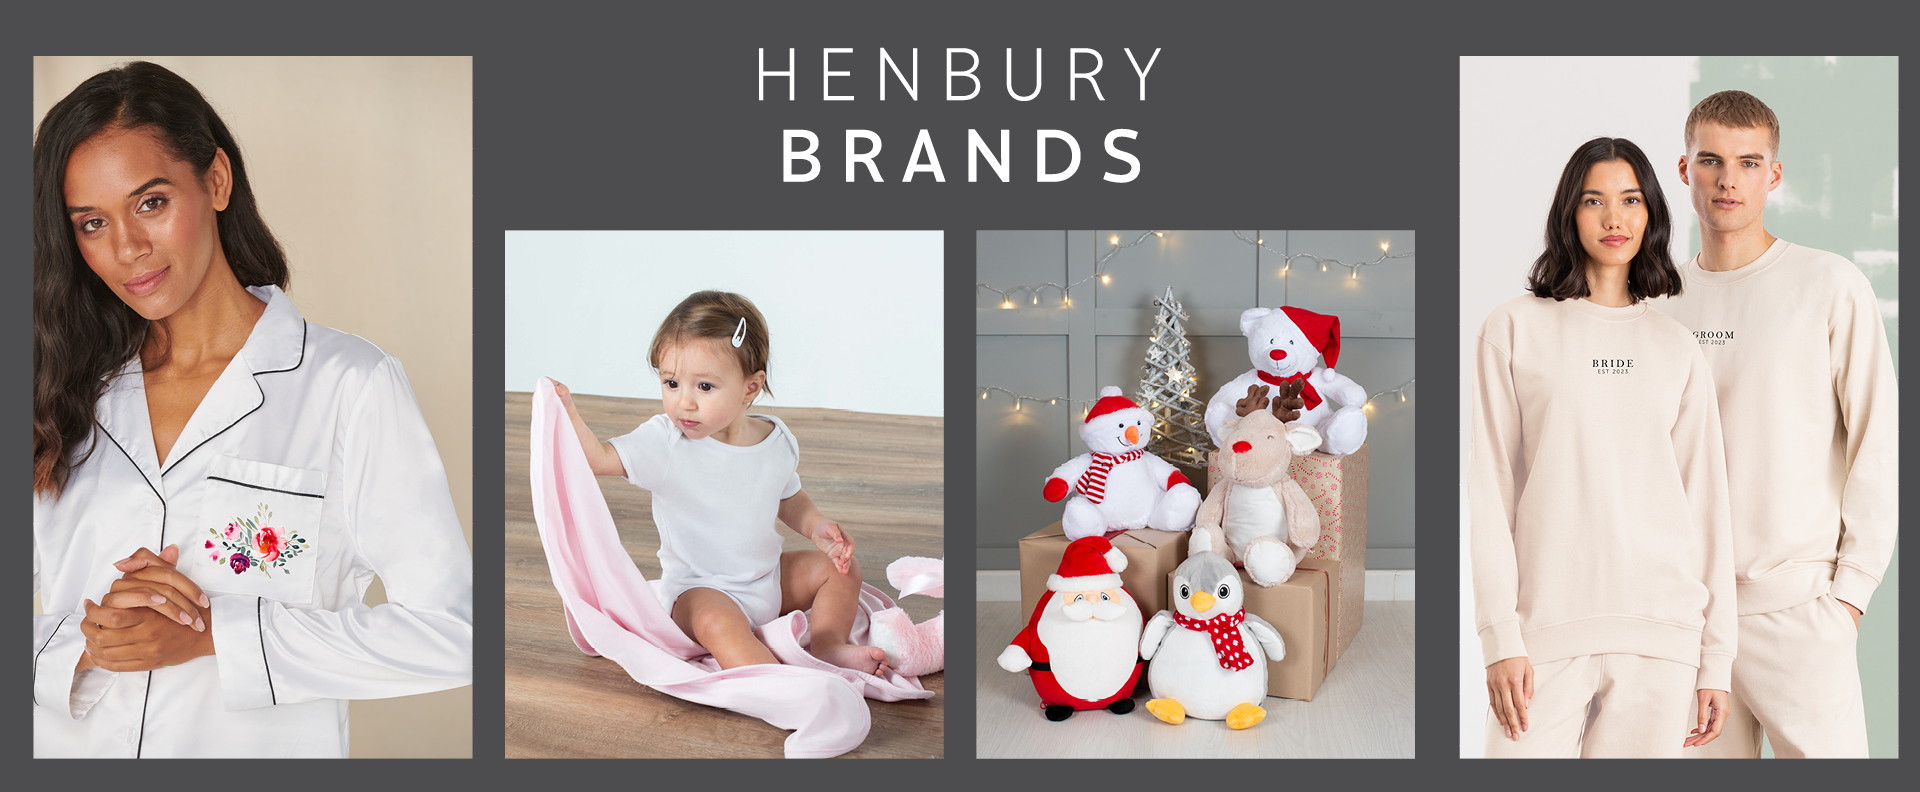 Henbury-Brands-Gifting-Guide